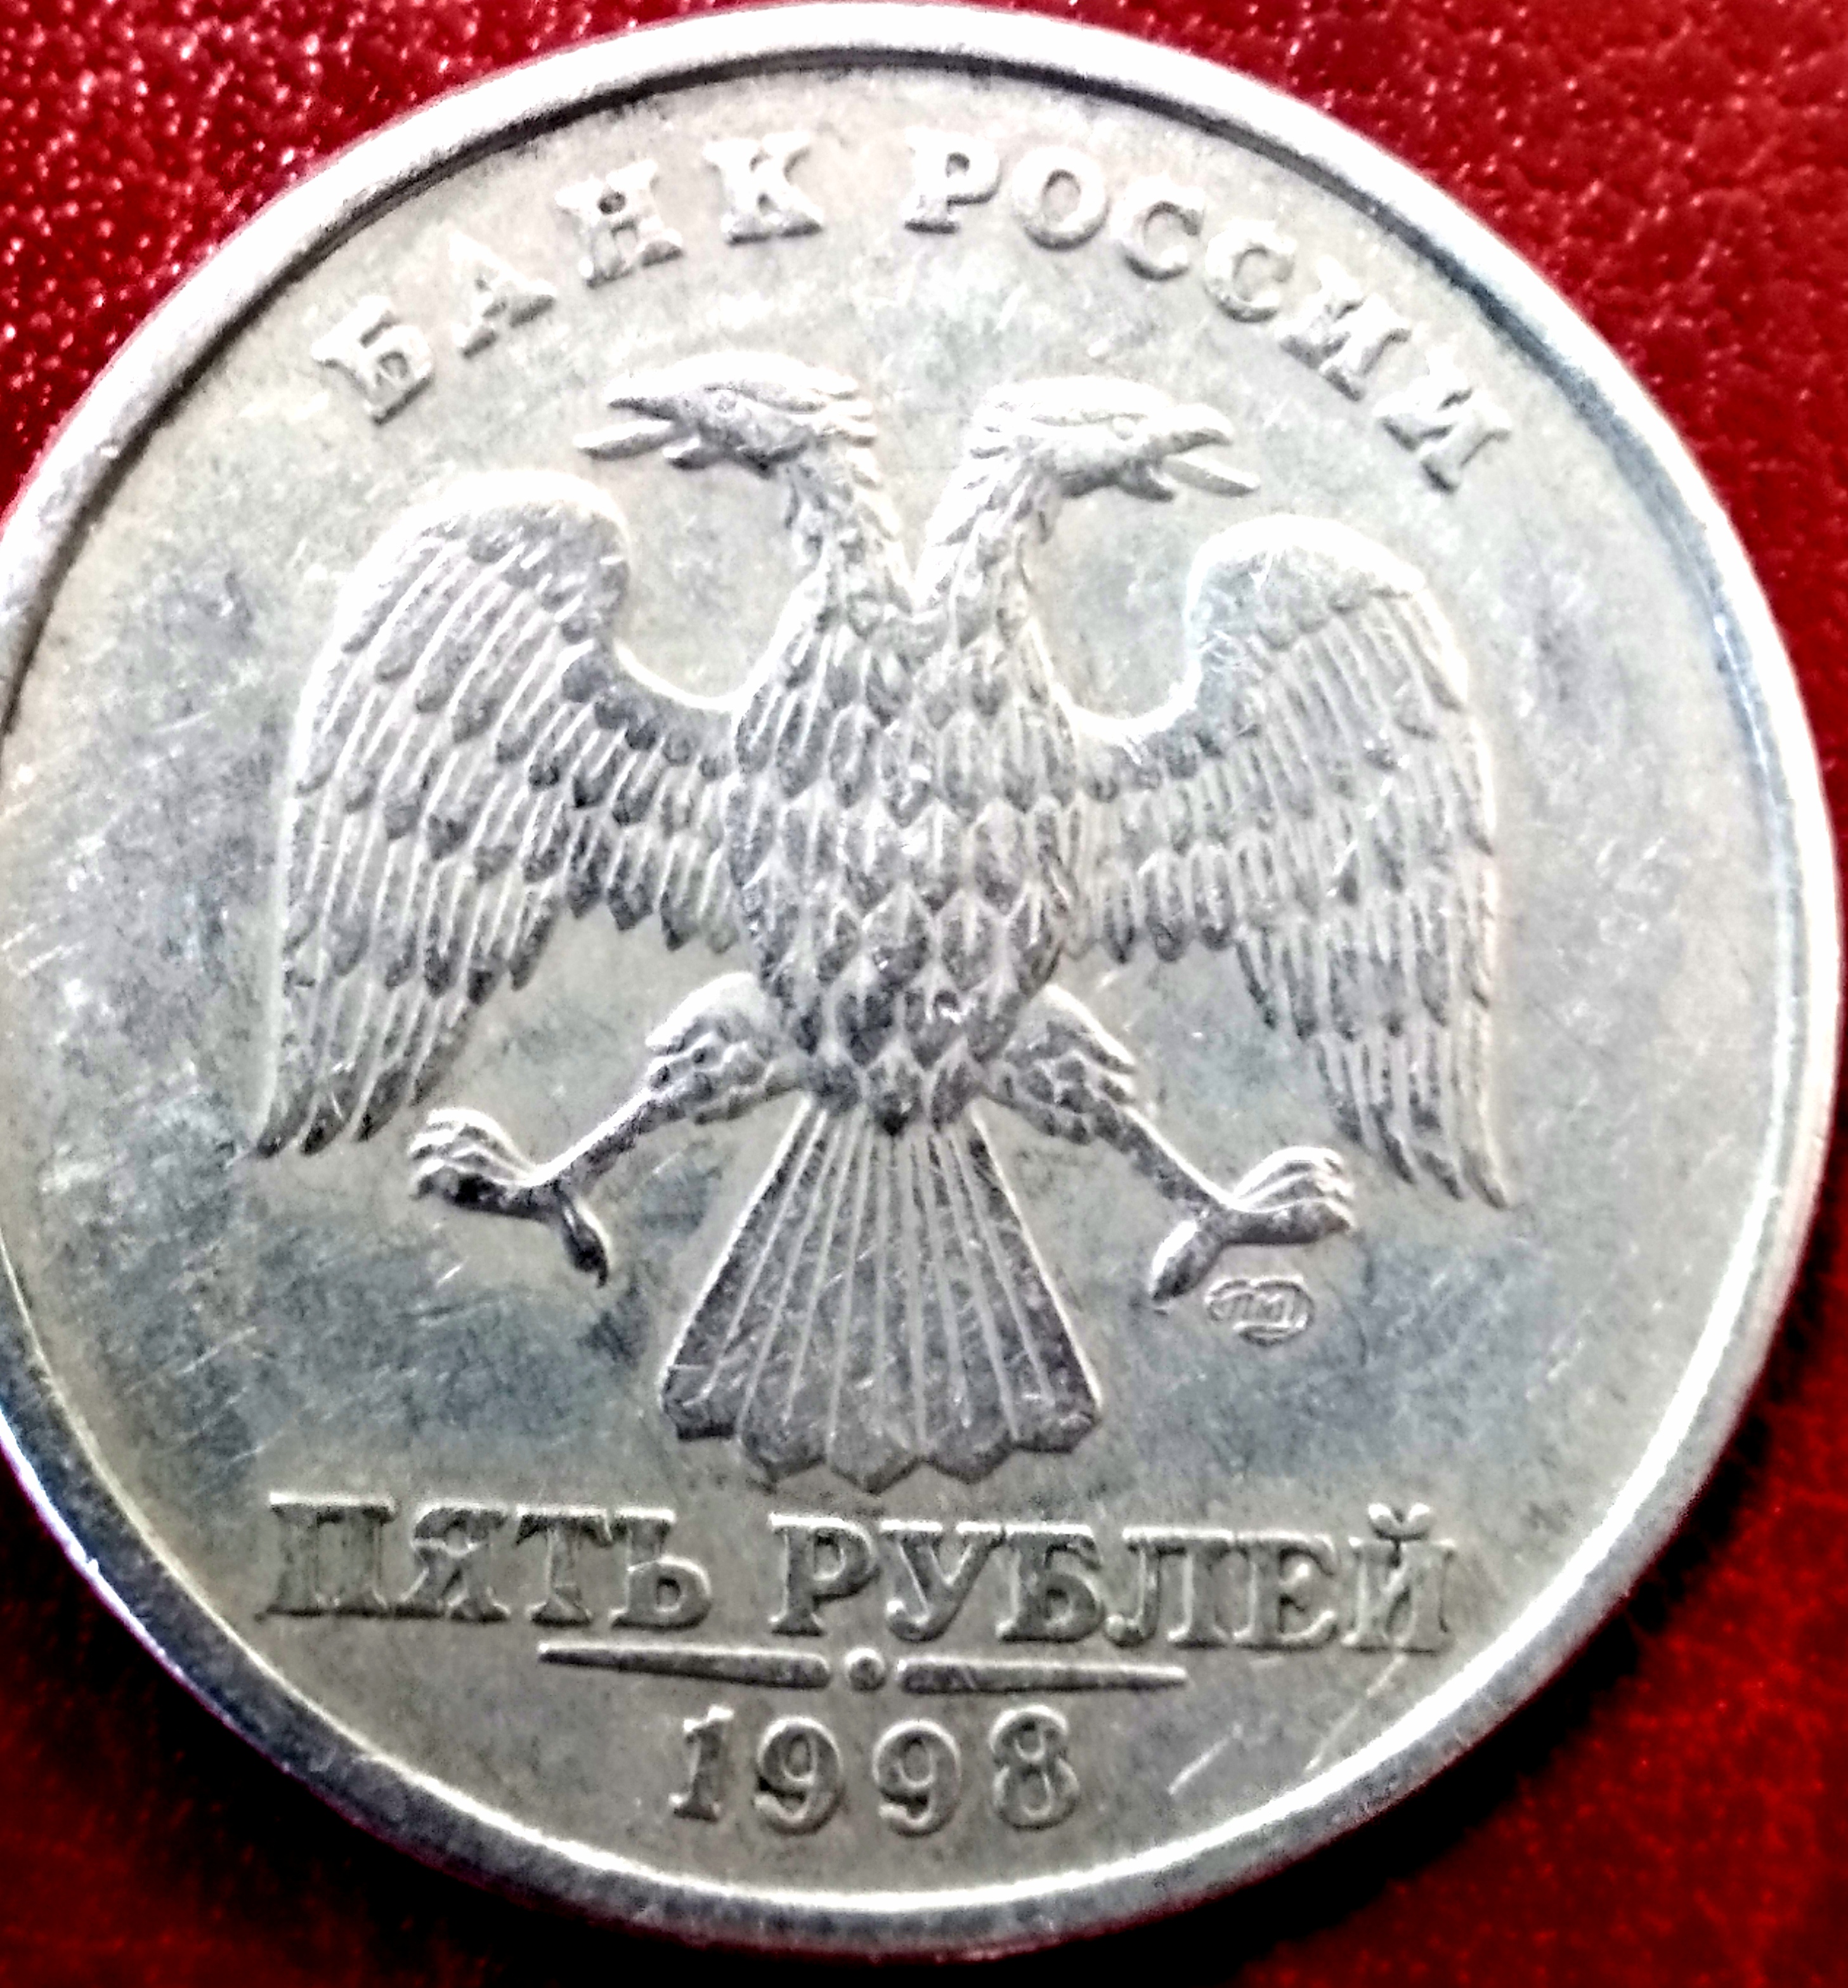 5 рублей дорог. 5 Рублей 1998 СПМД. Пять рублей СПМД 1998. 2 Рубля 1998 года. Дорогие монеты 5 рублей 1998.